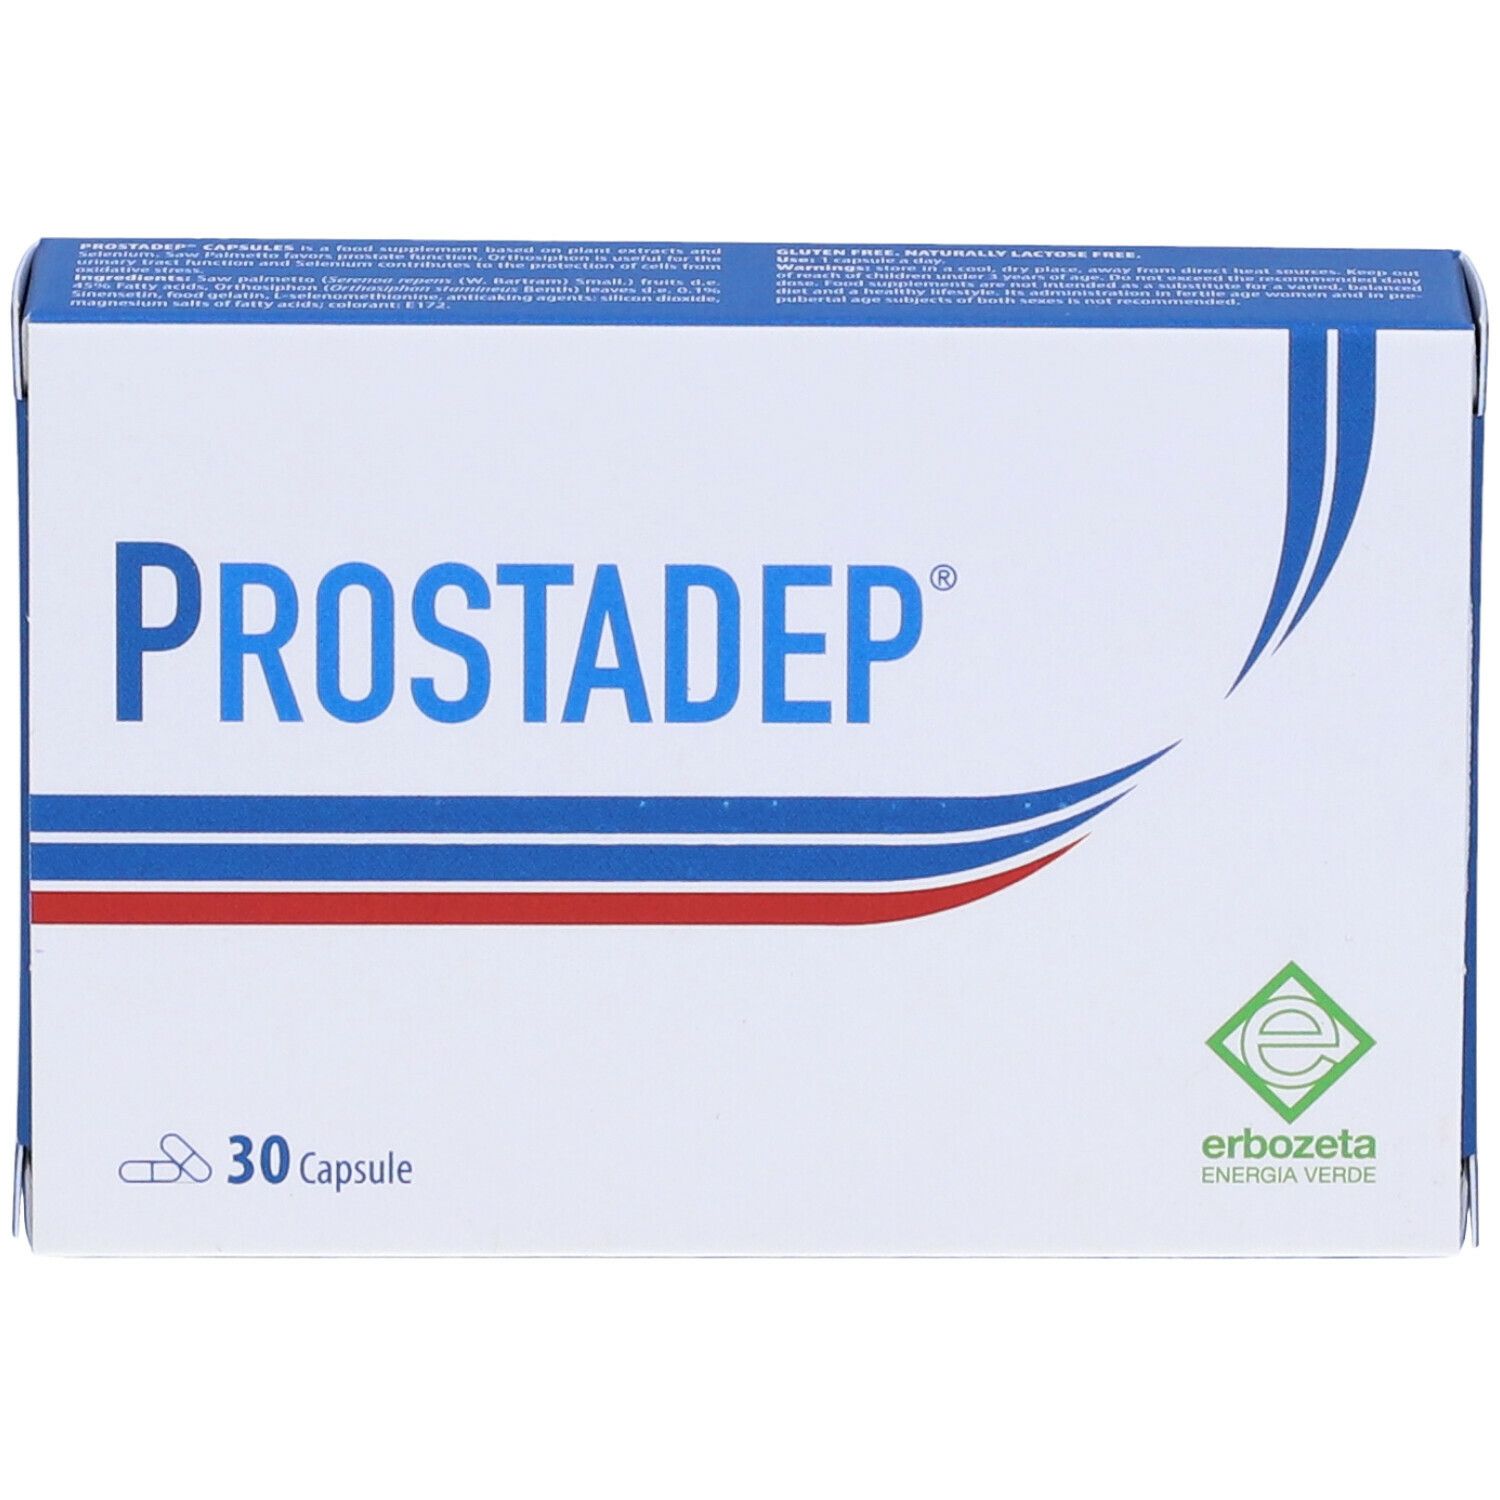 Prostadep®